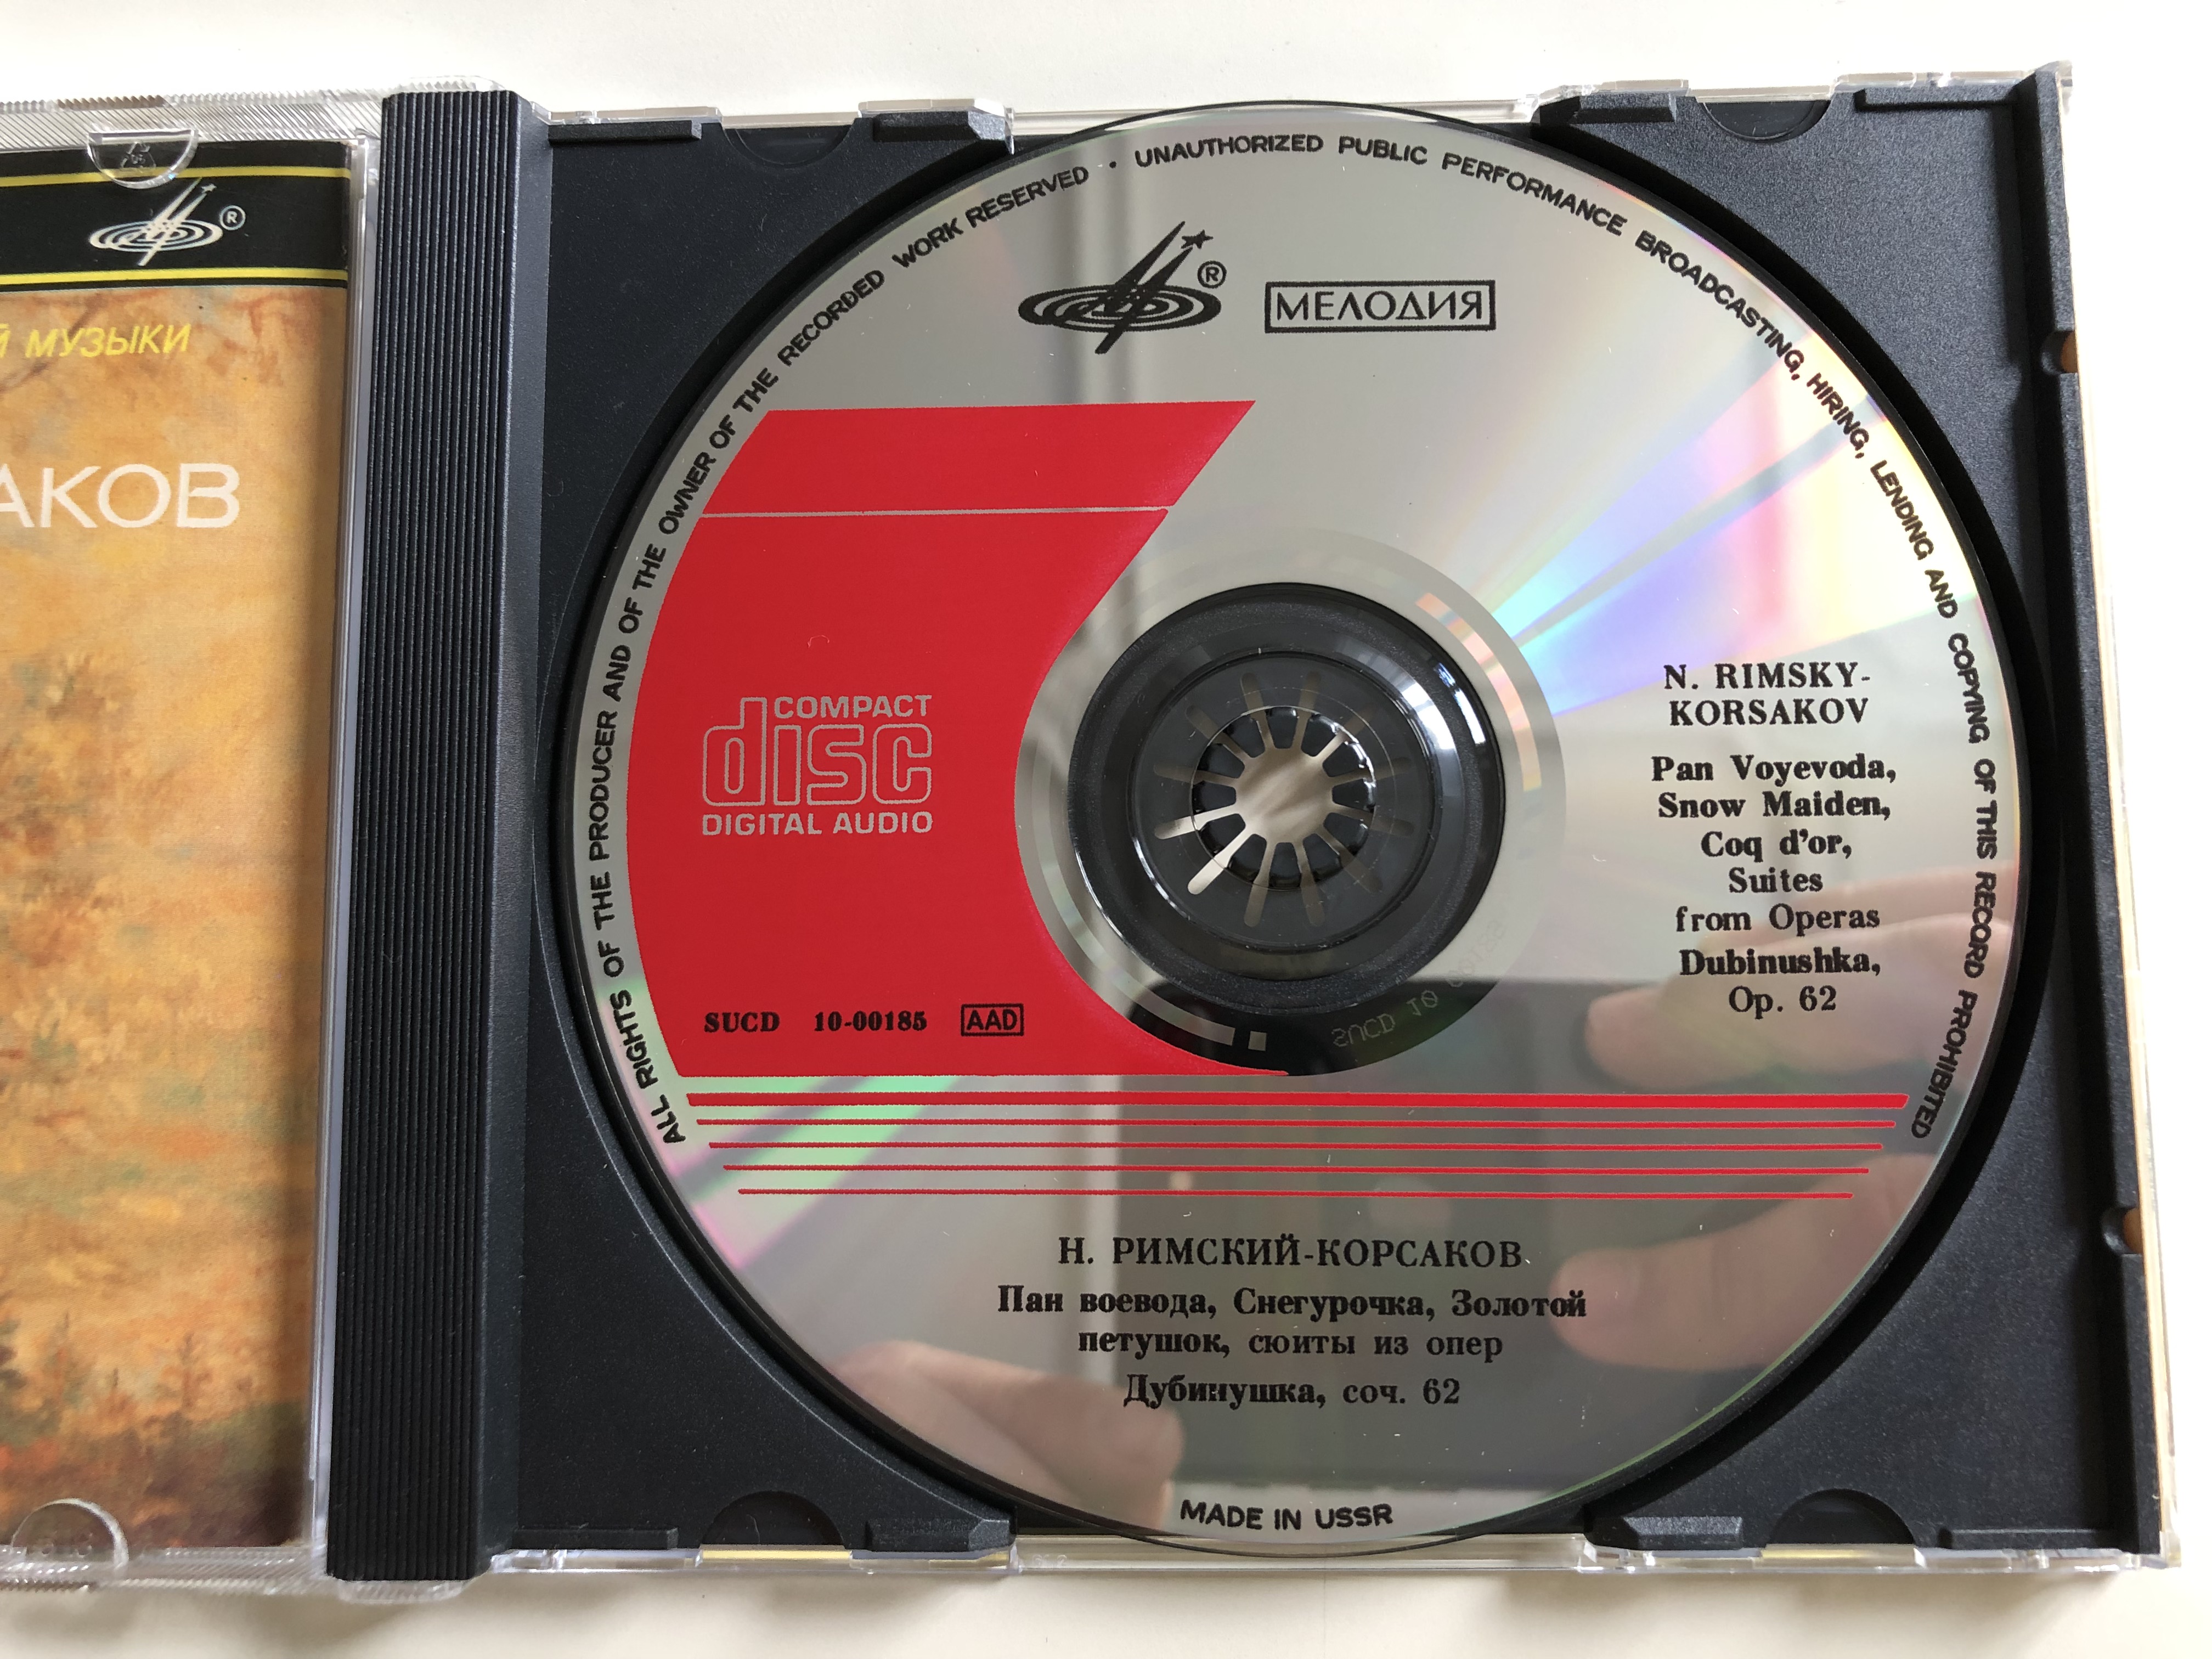 n.-rimsky-korsakov-pan-voyevoda-snow-maiden-coq-d-or-suites-from-operas-dubinushka-conductor-evgeni-svetlanov-anthology-of-russian-symphony-music-55.-melodiya-audio-cd-1991-5-.jpg